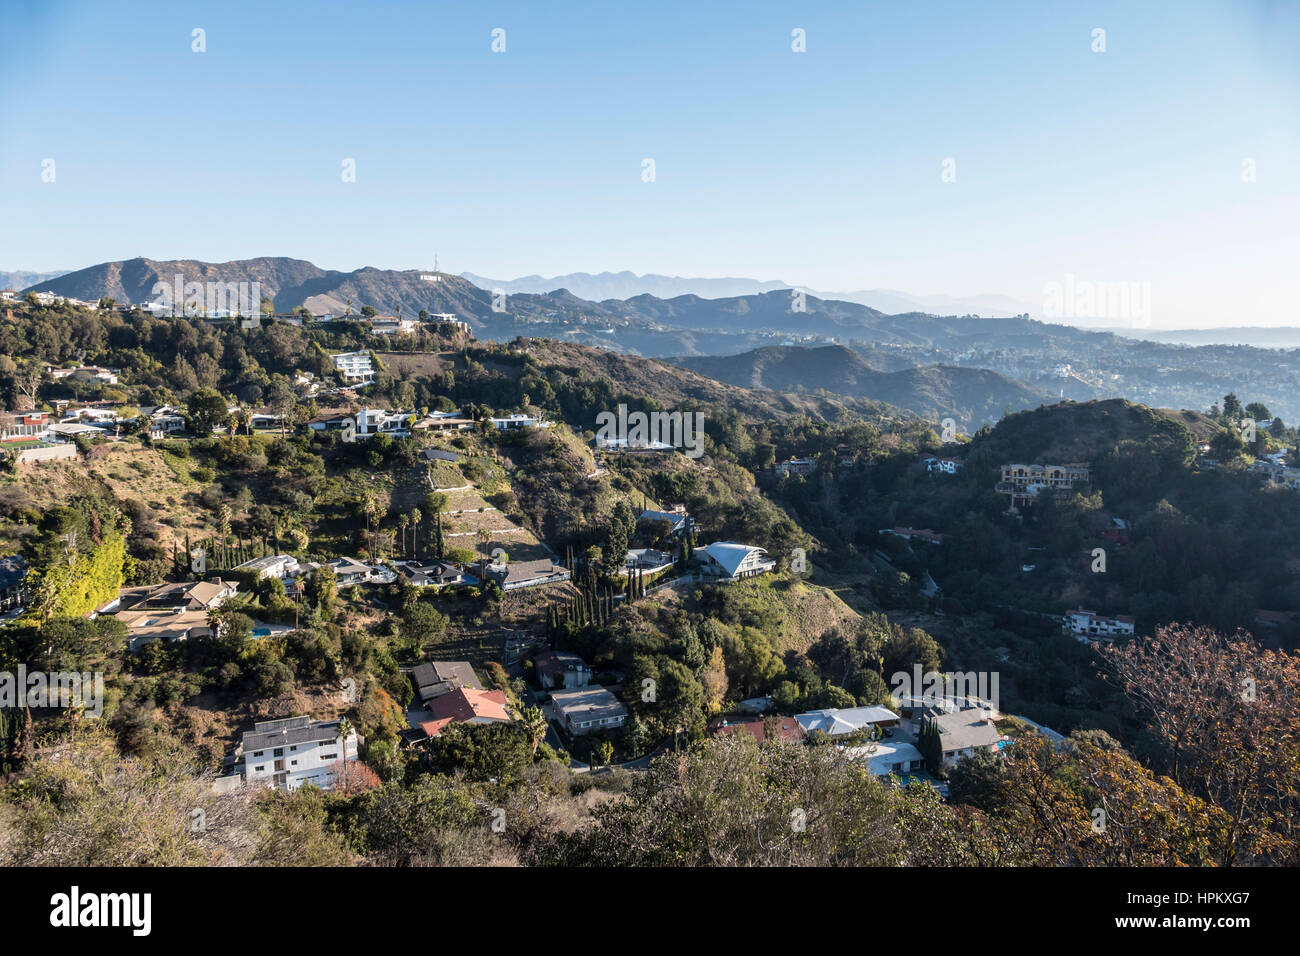 Los Angeles, Kalifornien, USA - 1. Januar 2015: Silvester Morgen unter den Hollywood-Schriftzug in den Hollywood Hills Gegend von Los Angeles. Stockfoto